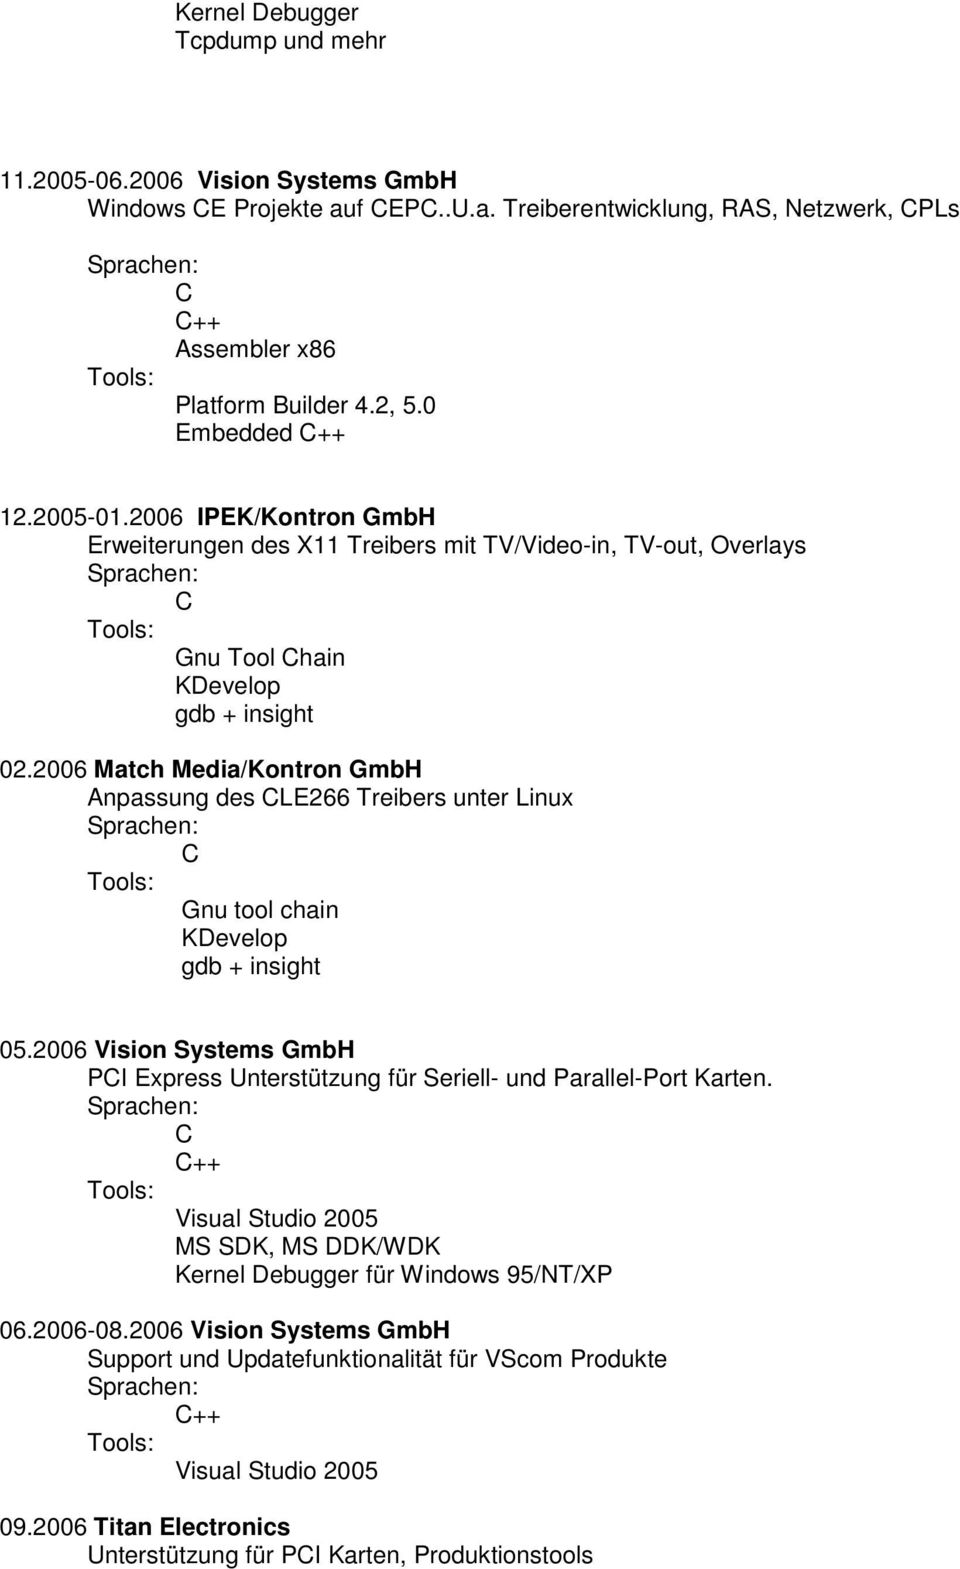 2006 Match Media/Kontron GmbH Anpassung des LE266 Treibers unter Linux Gnu tool chain KDevelop gdb + insight 05.